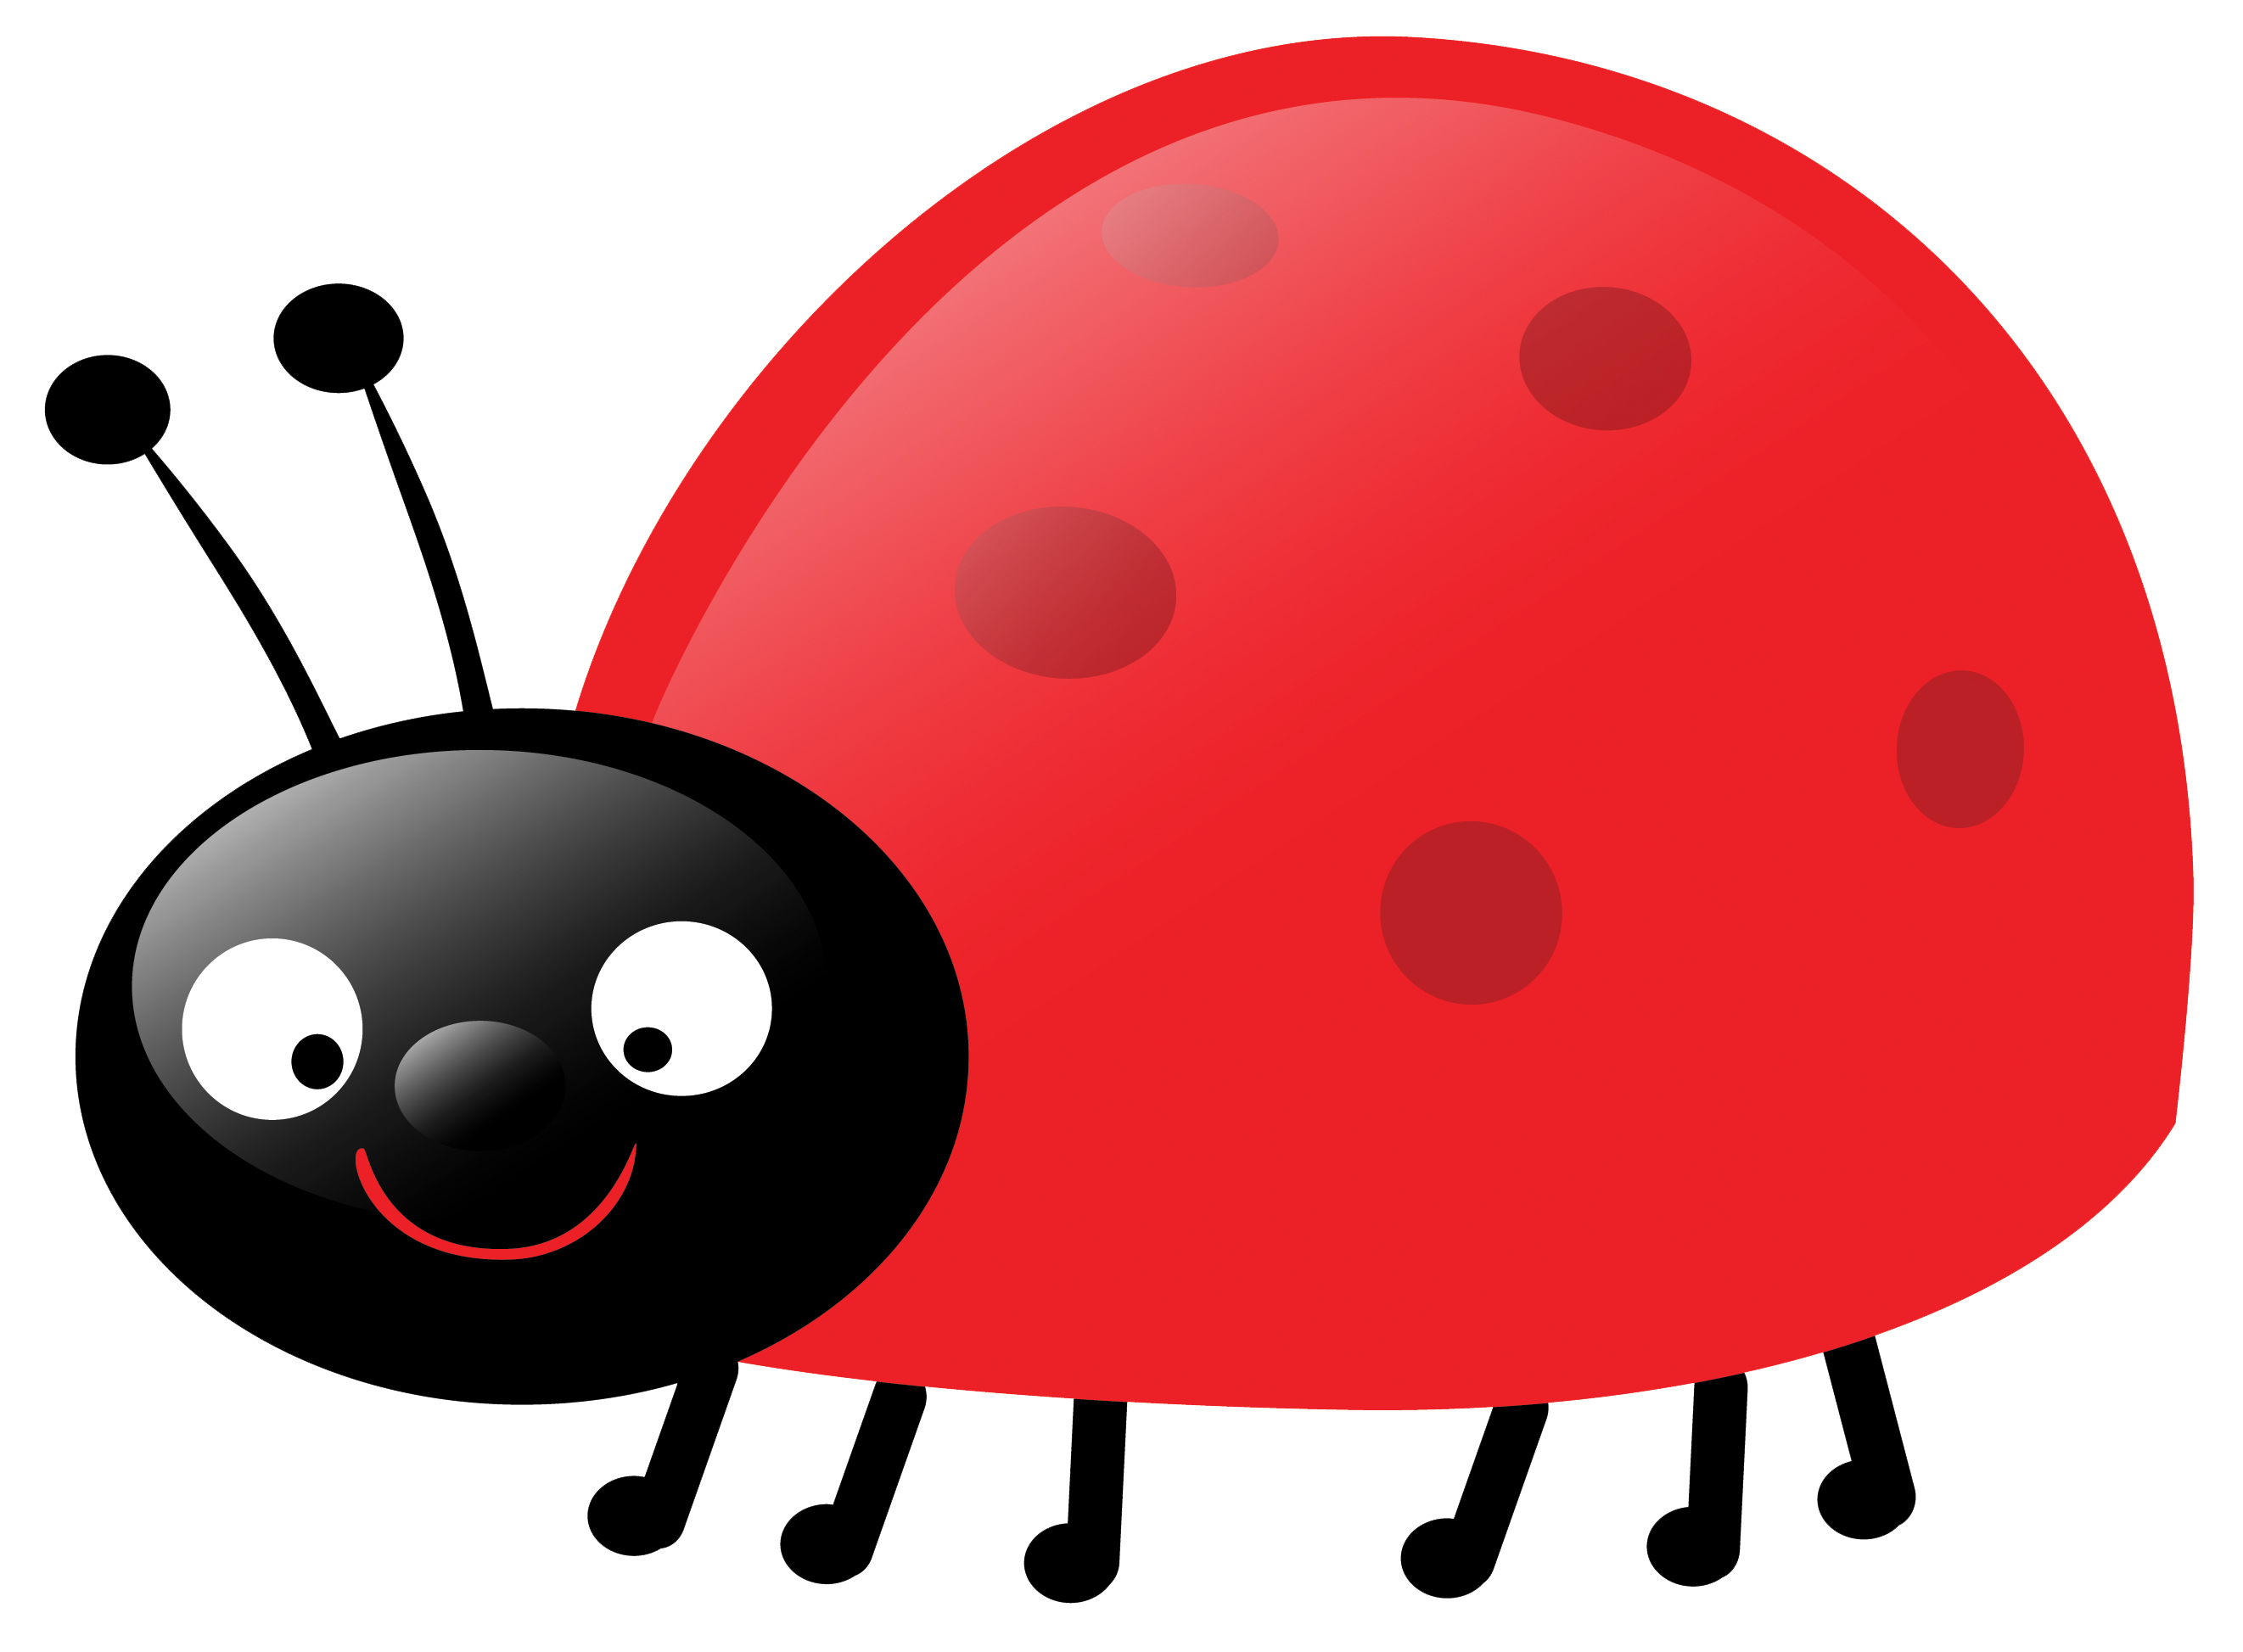 Cute Ladybug Clipart